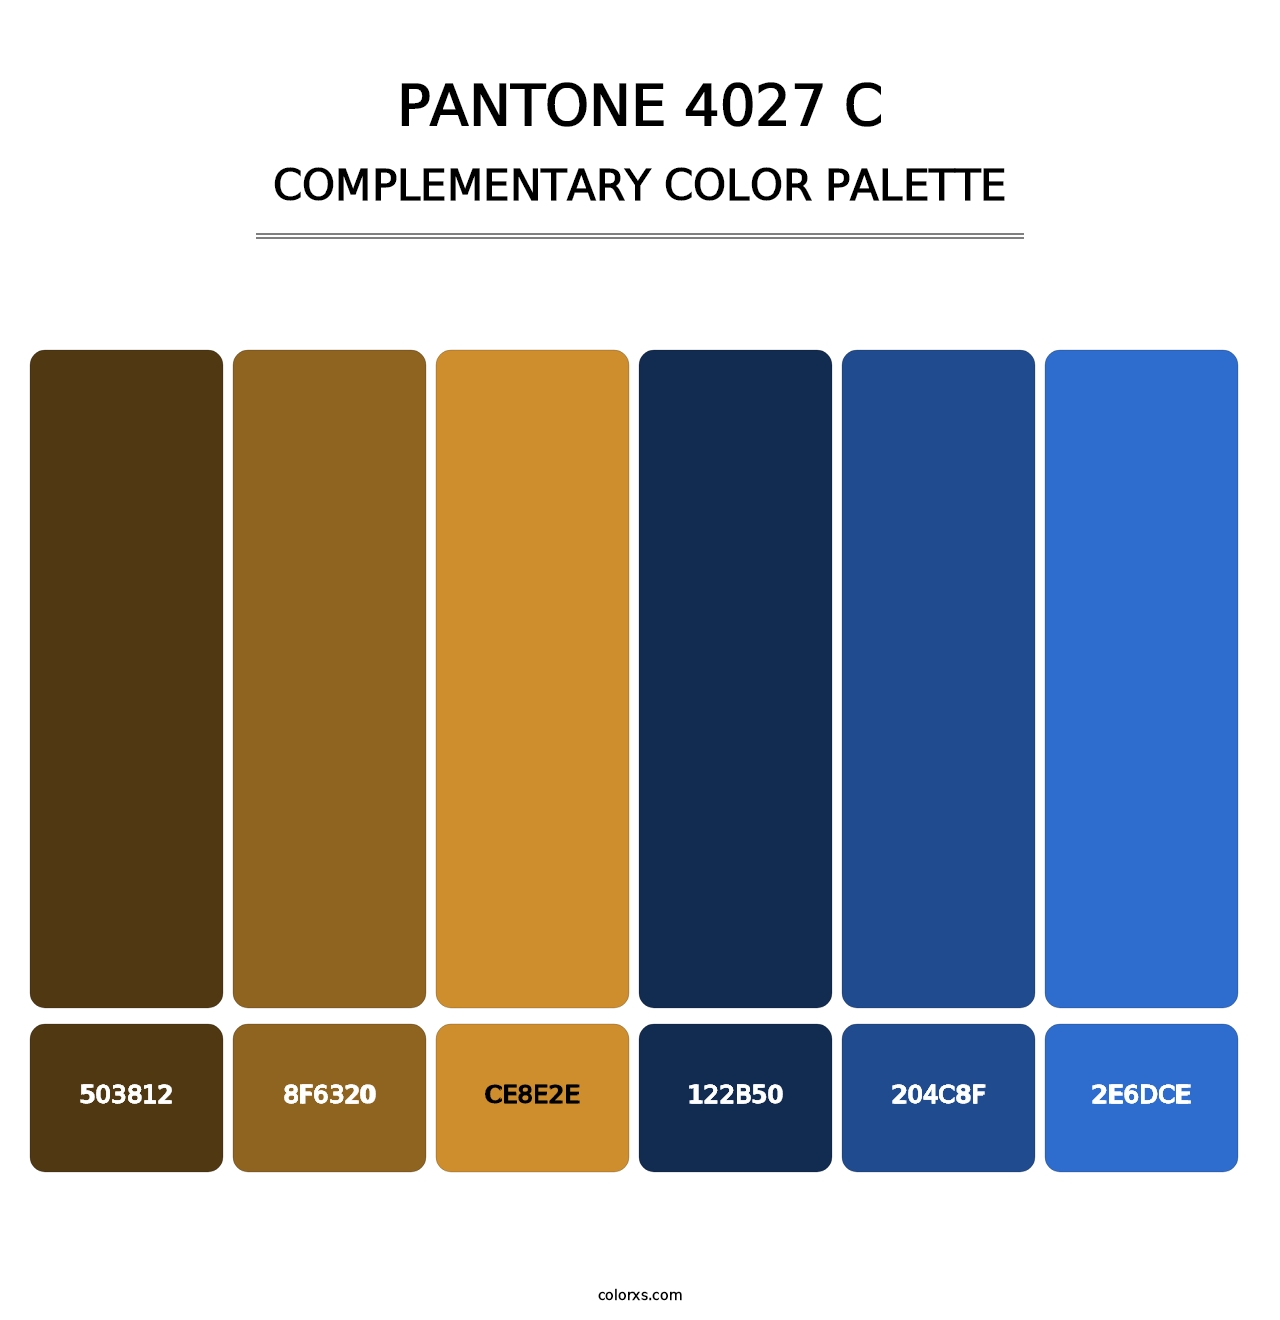 PANTONE 4027 C - Complementary Color Palette